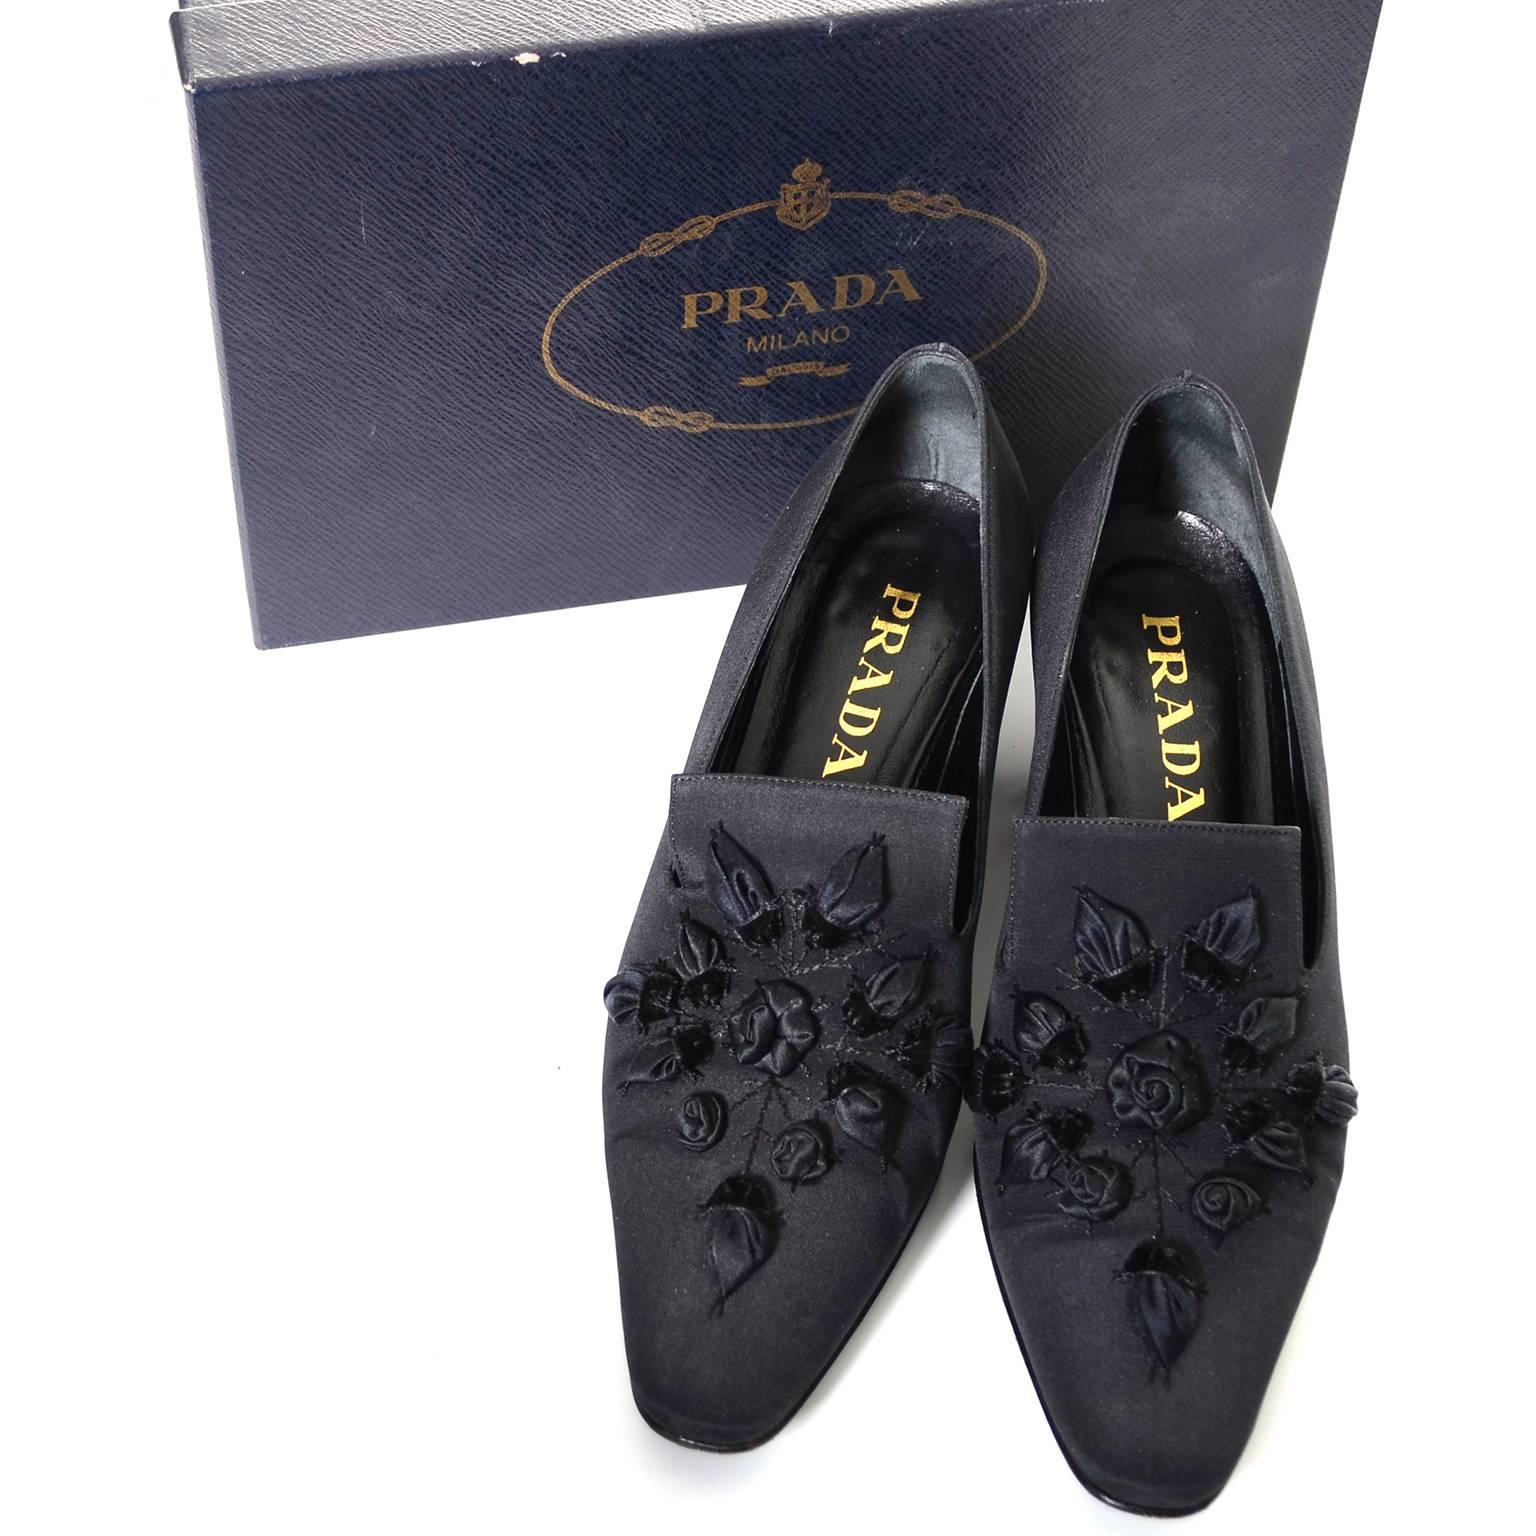 Calzature Donna Prada - 3 For Sale on 1stDibs | prada calzature donna  heels, prada calzature donna camoscio, calzature donna prada shoes